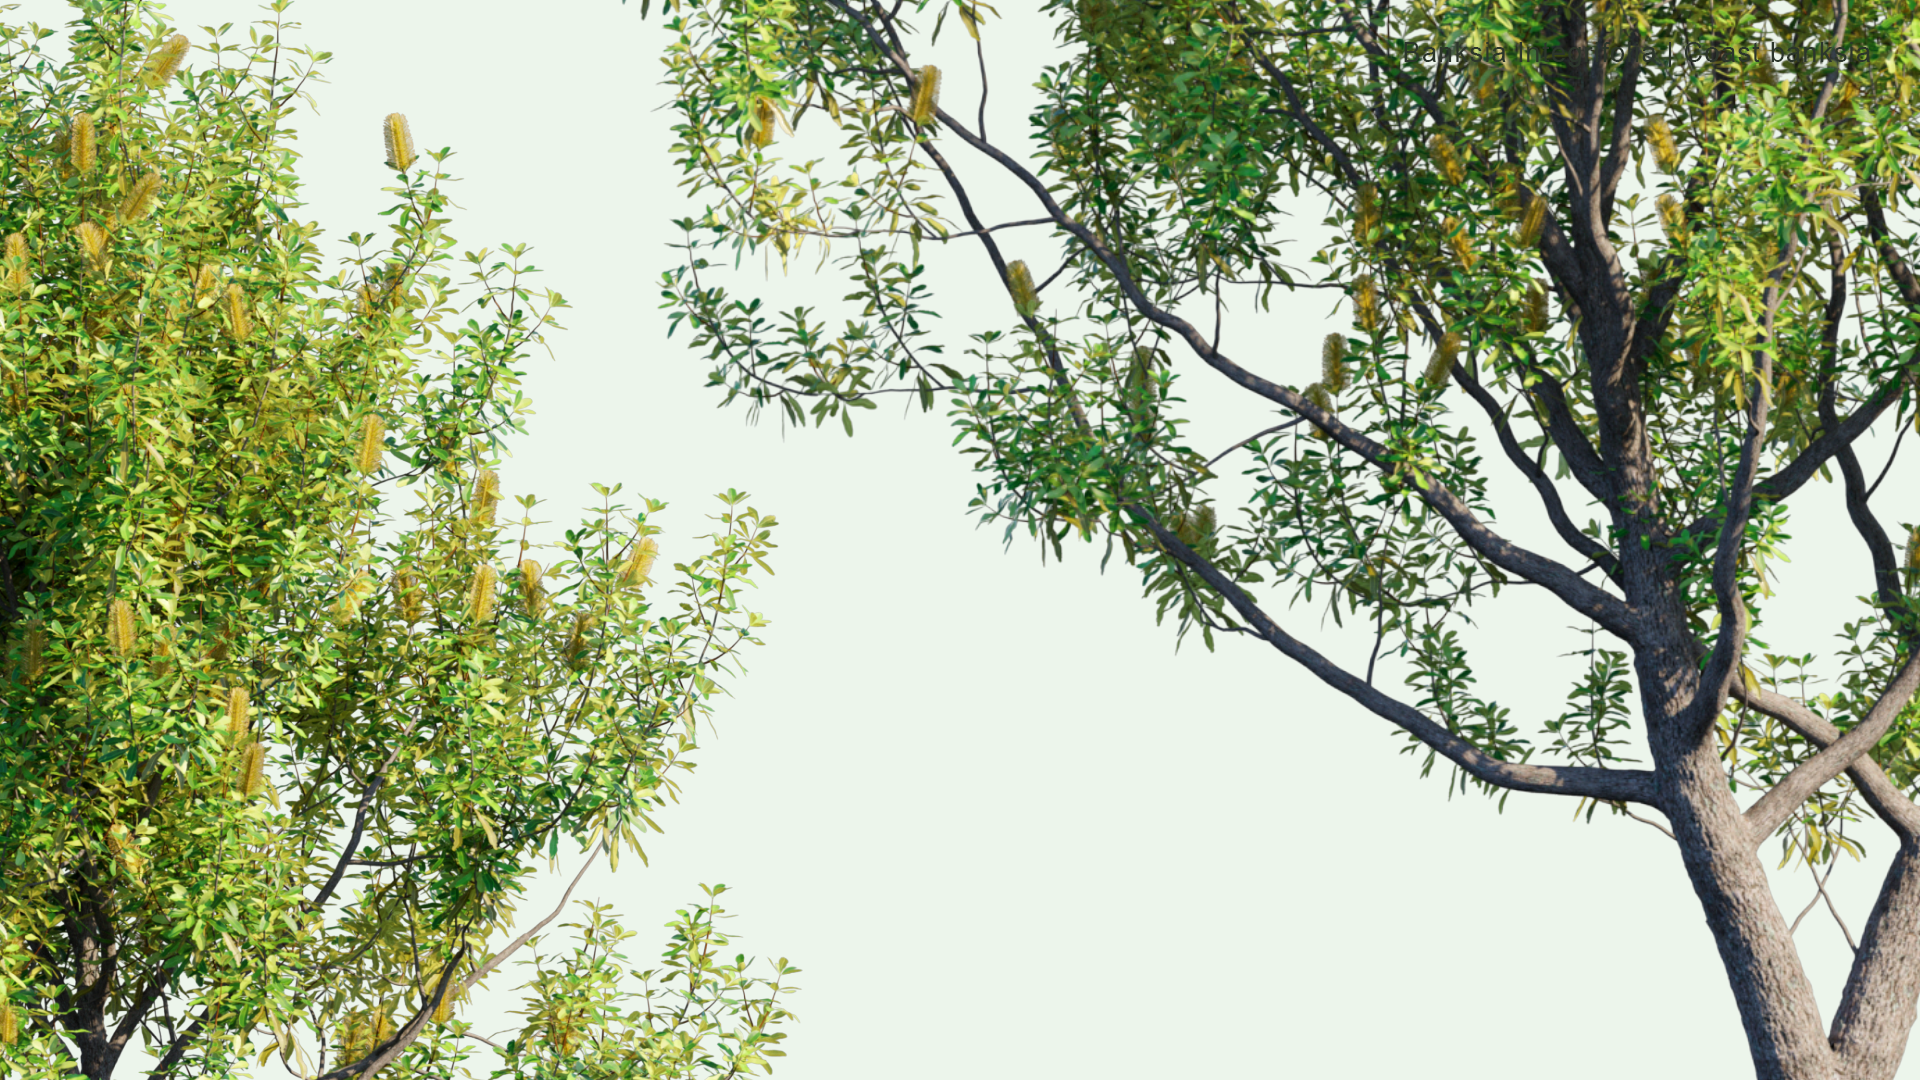 2D Banksia Integrifolia - Coast Banksia